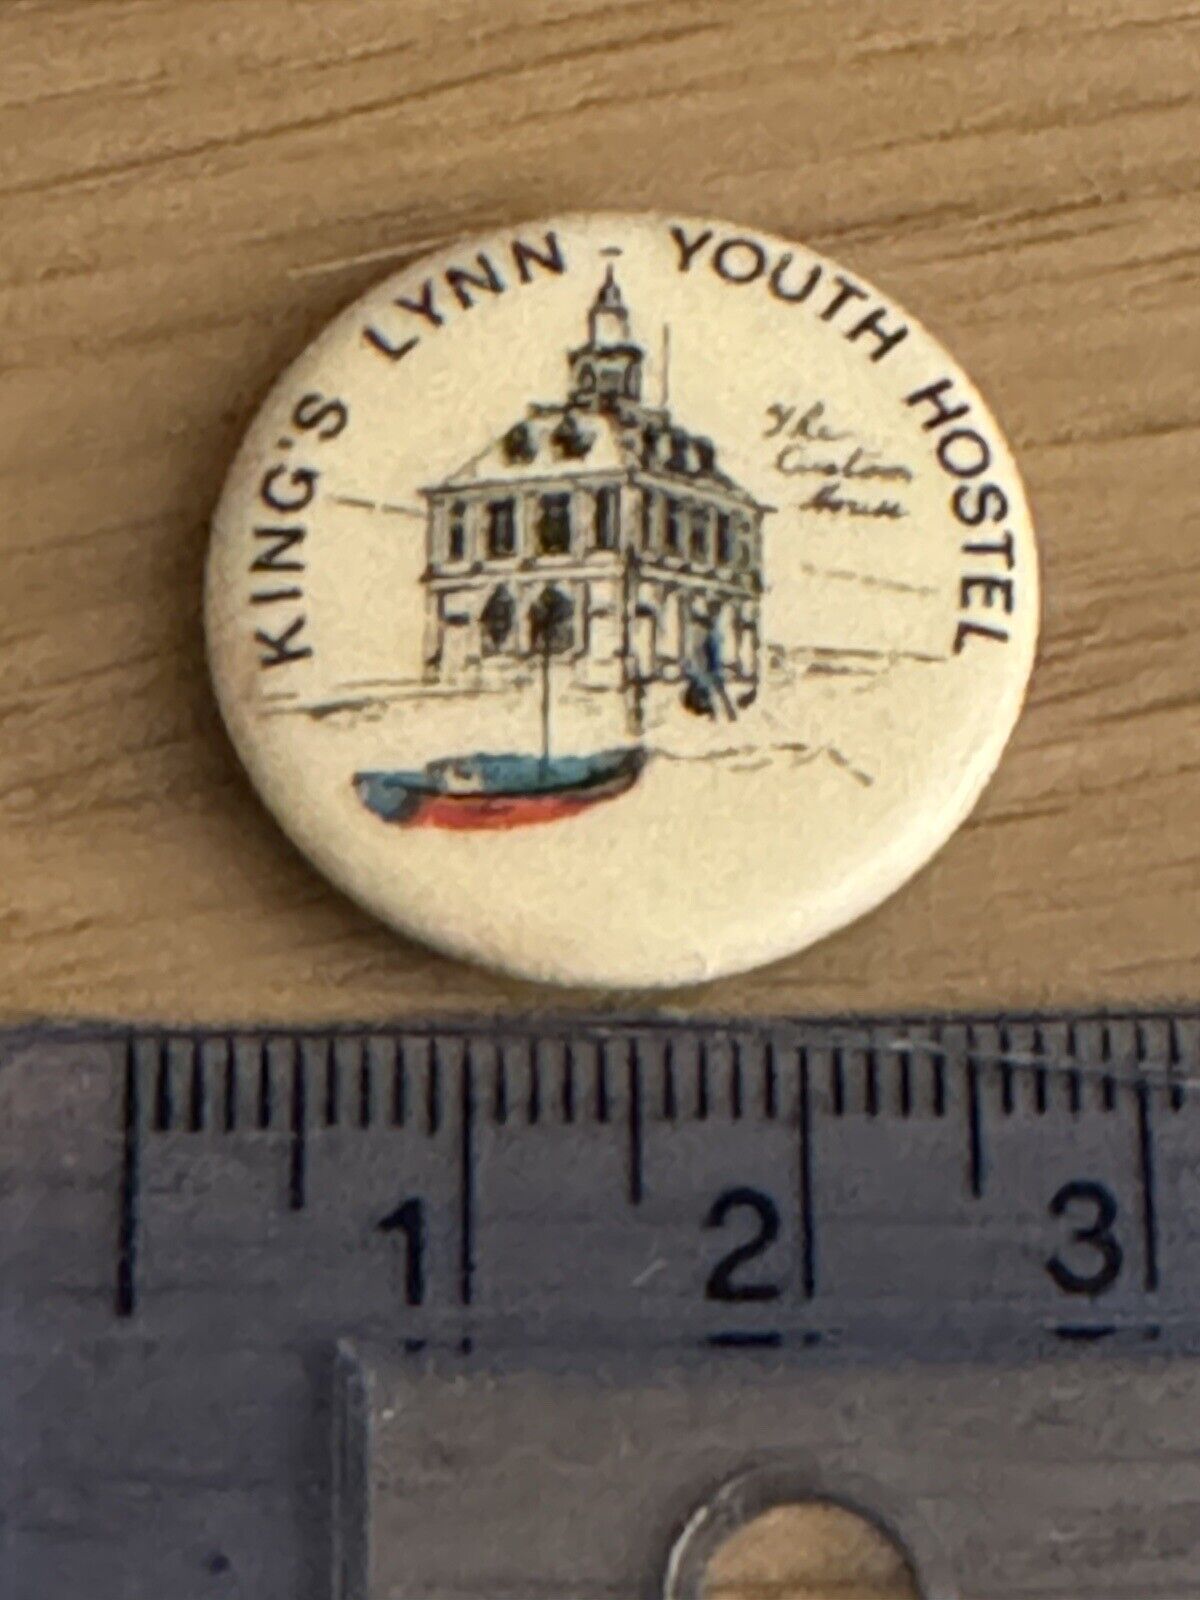 Vintage UK Youth Hostel Pin Button Badge - Kings Lynn